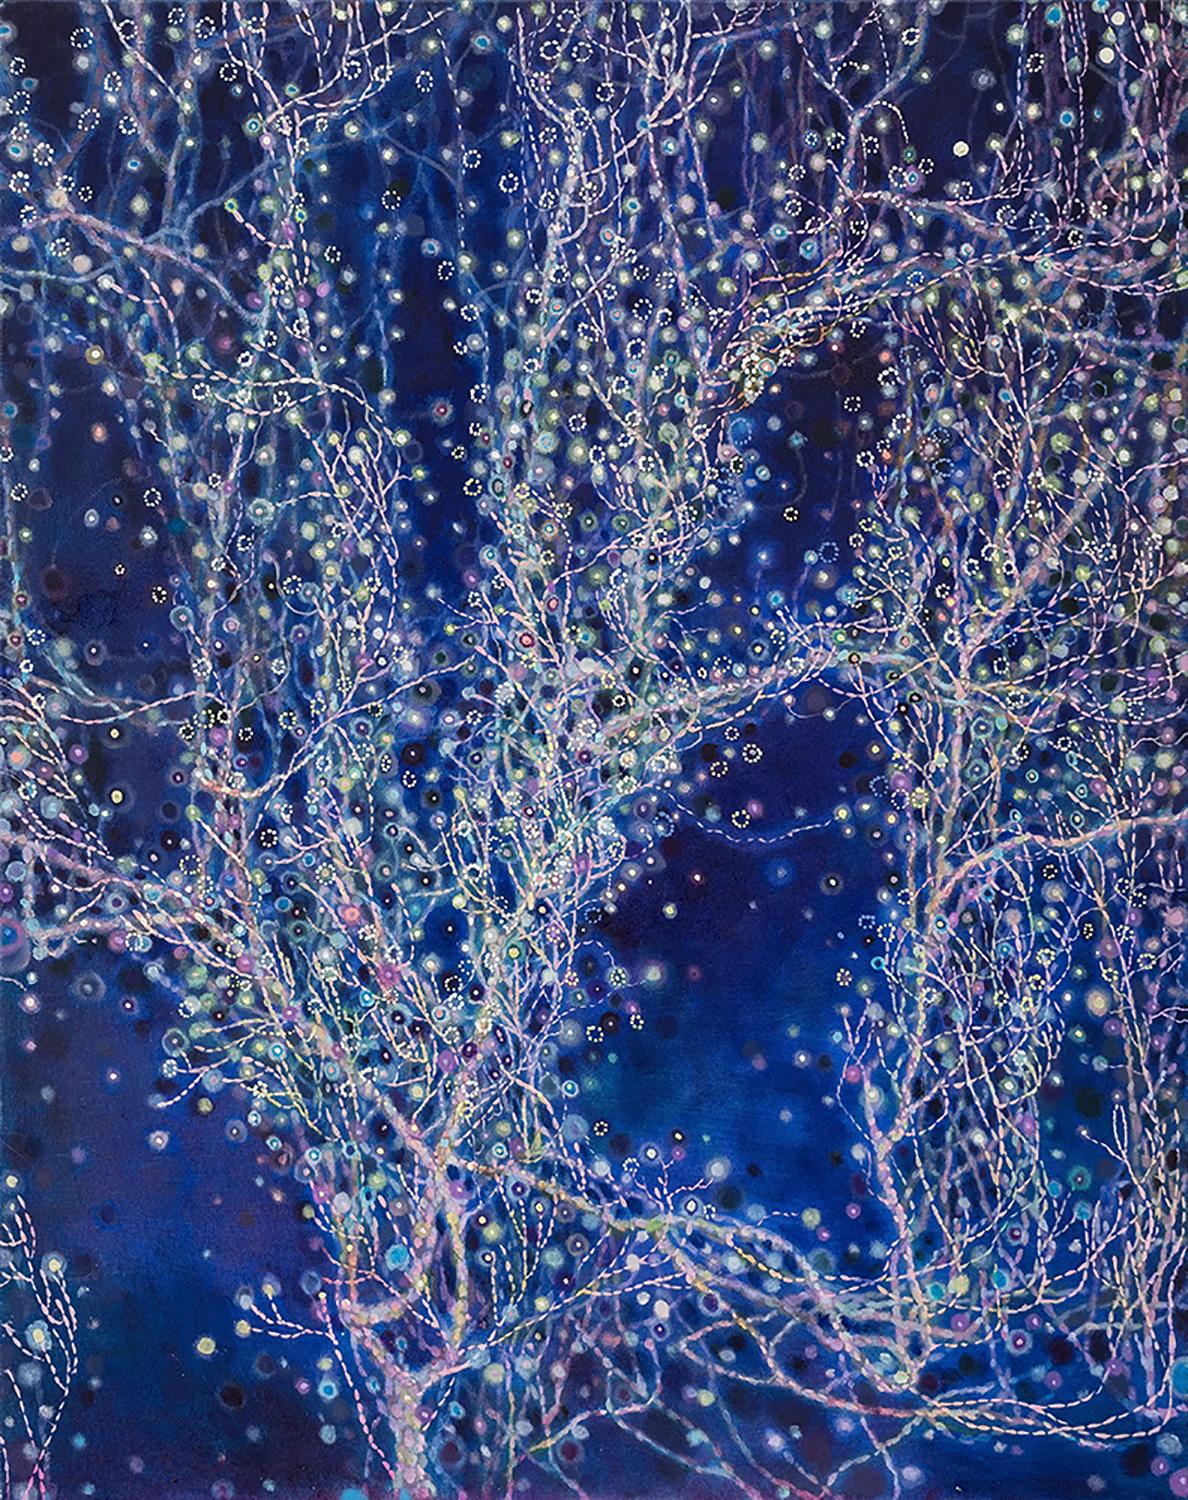 Guo Shu Ling Abstract Painting – Mysteriöse und romantische Naturszenen in Blau, Silber in abstrakter Expression